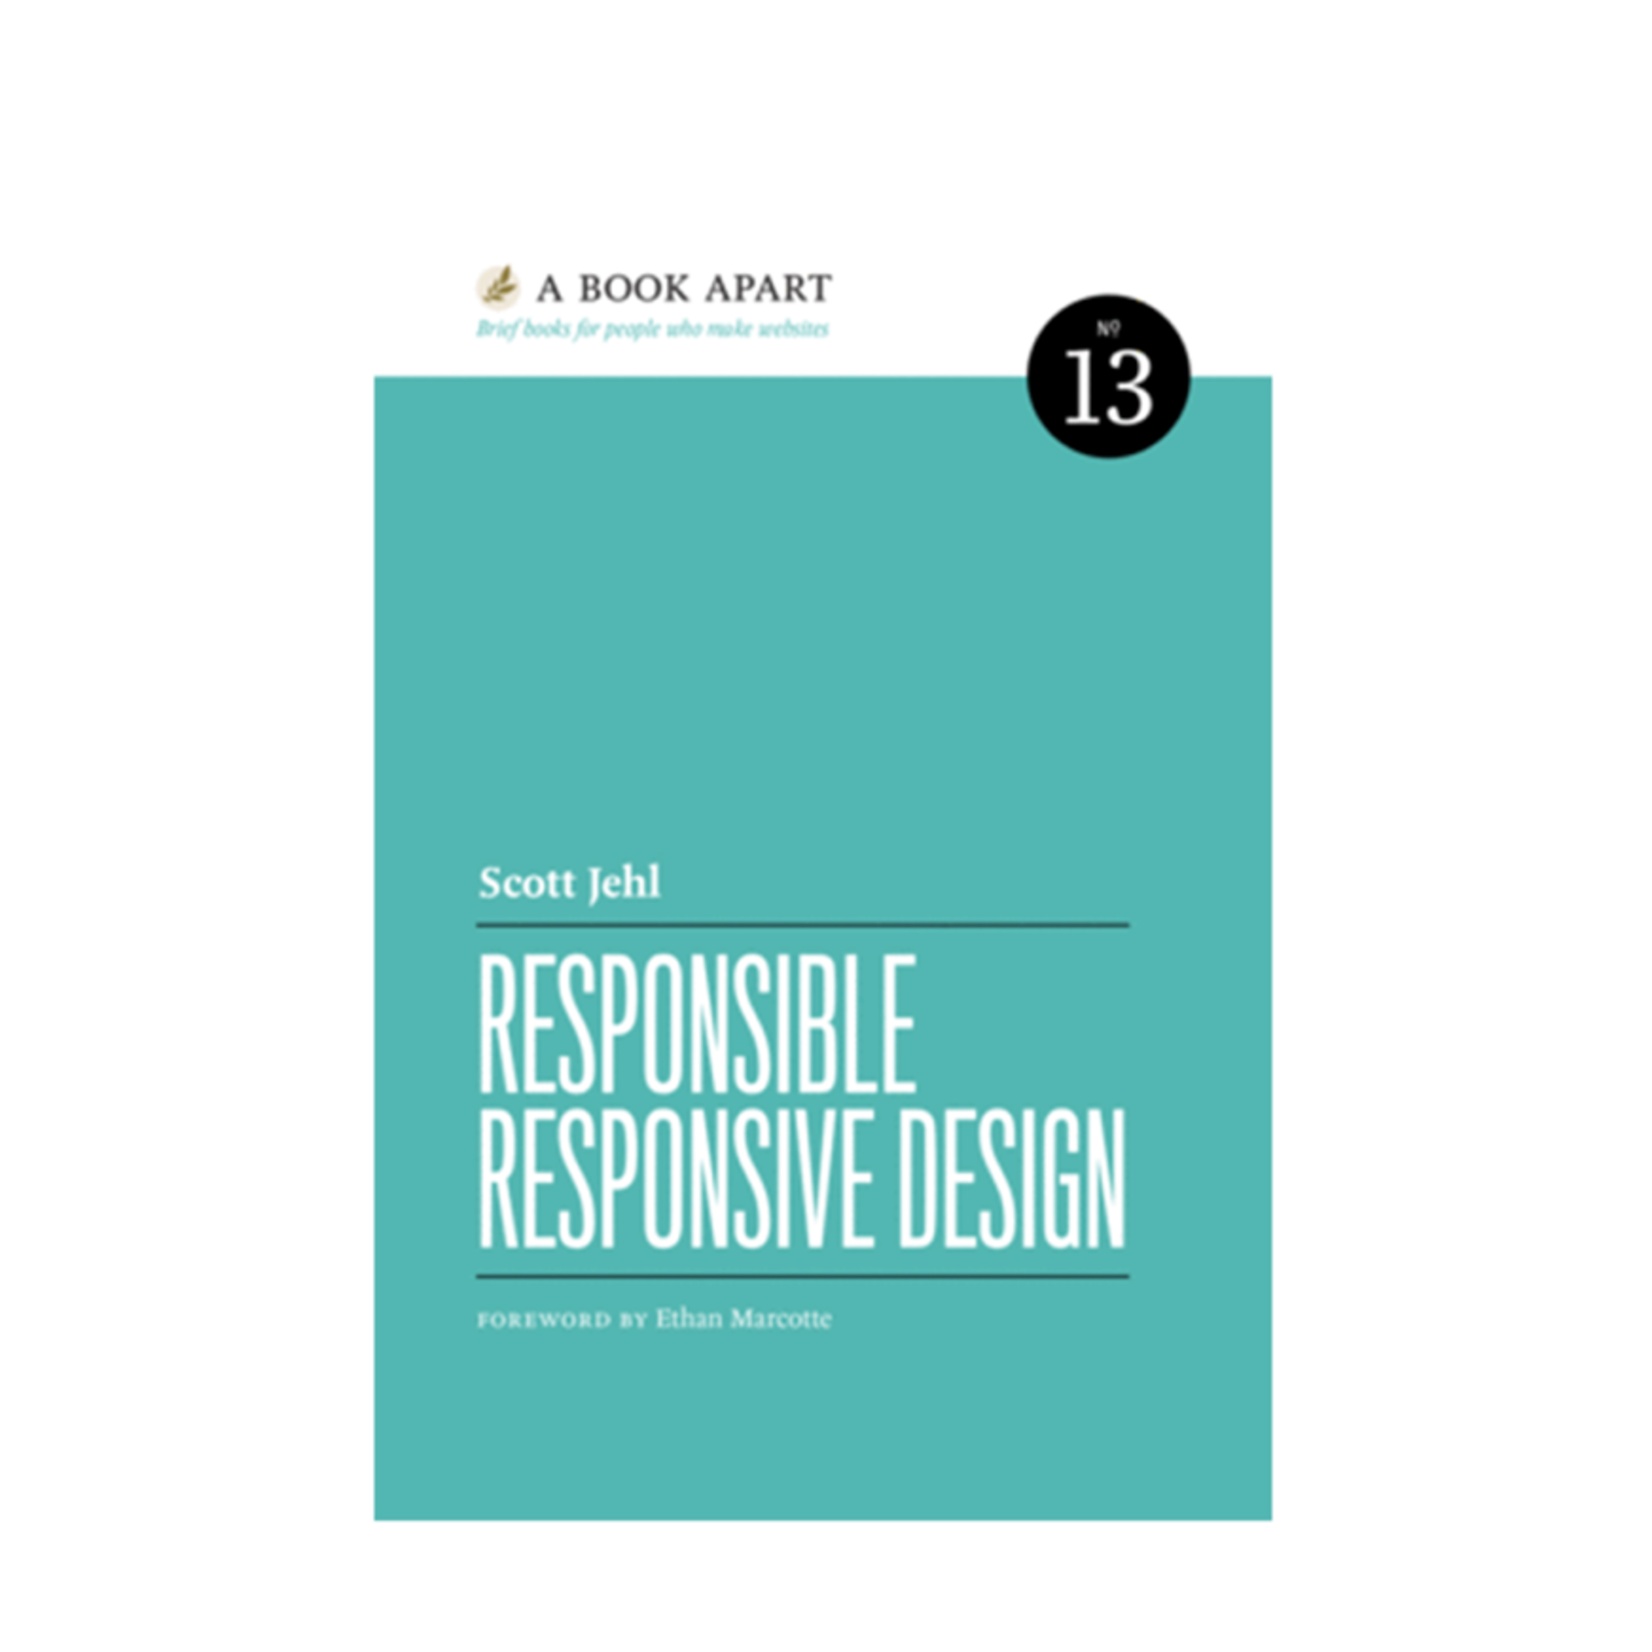 A Book Apart: Responsible Responsive Design (No. 13)